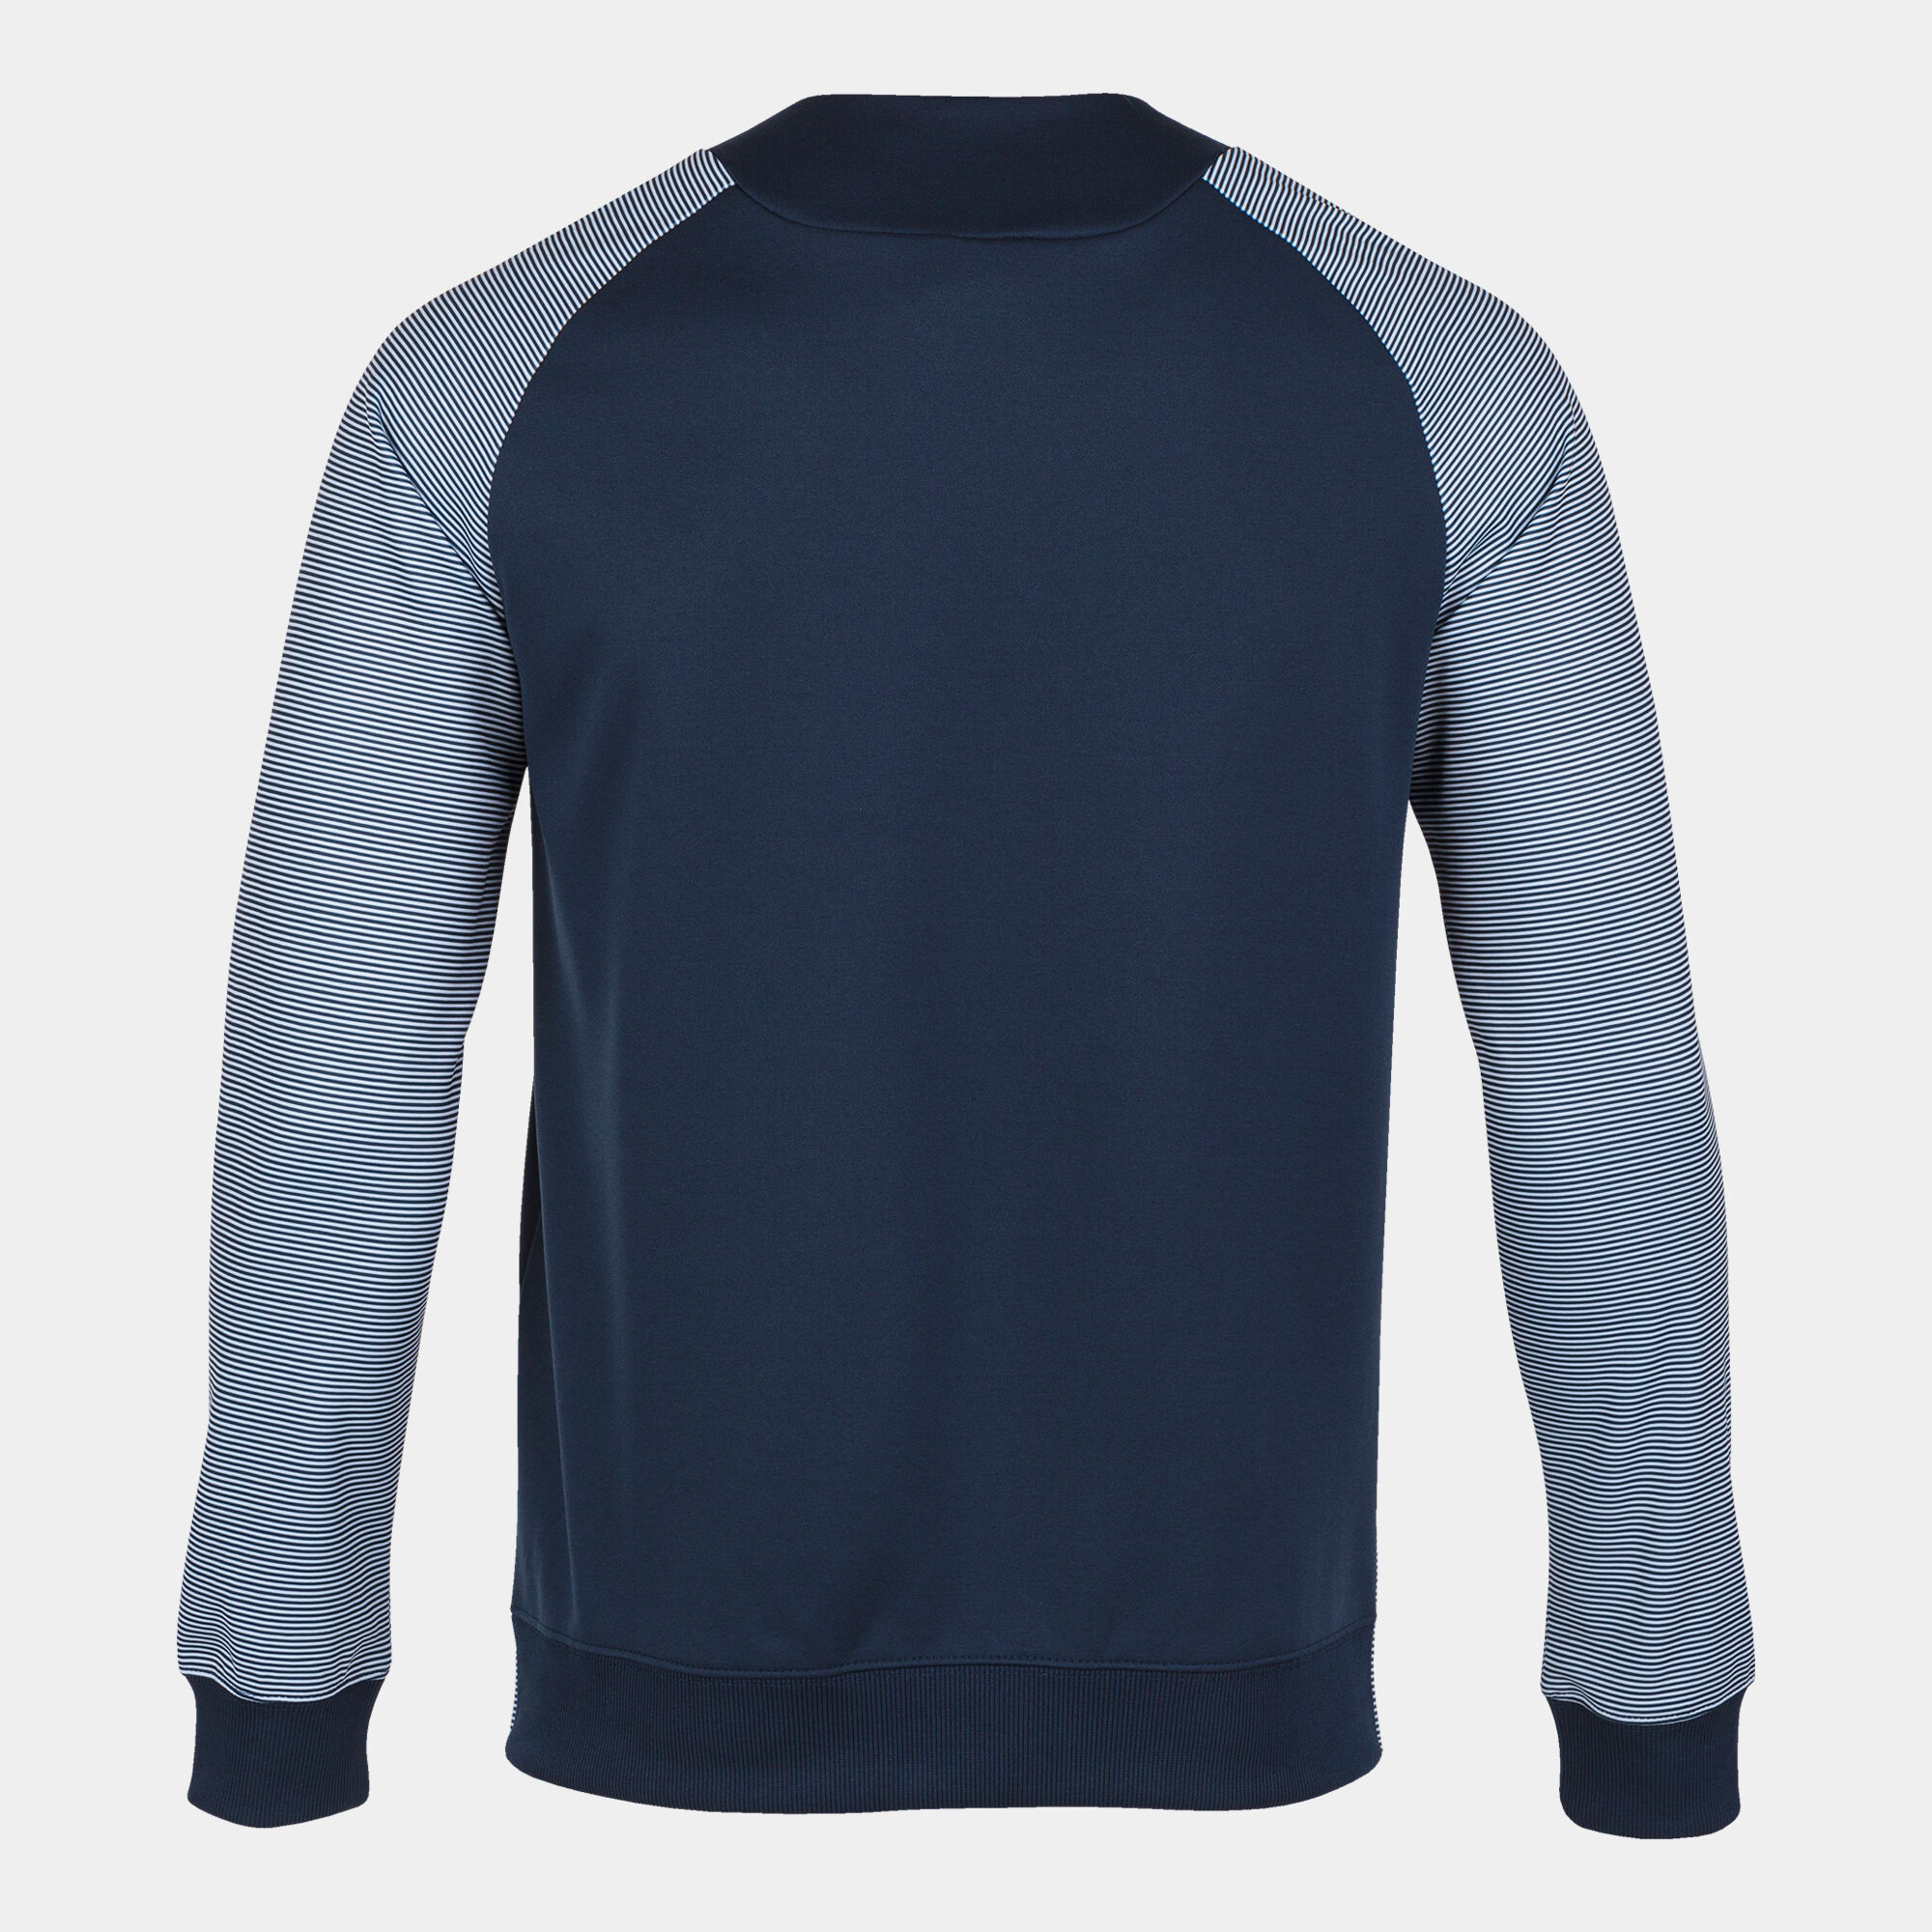 Sweat-shirt homme Essential II bleu marine blanc